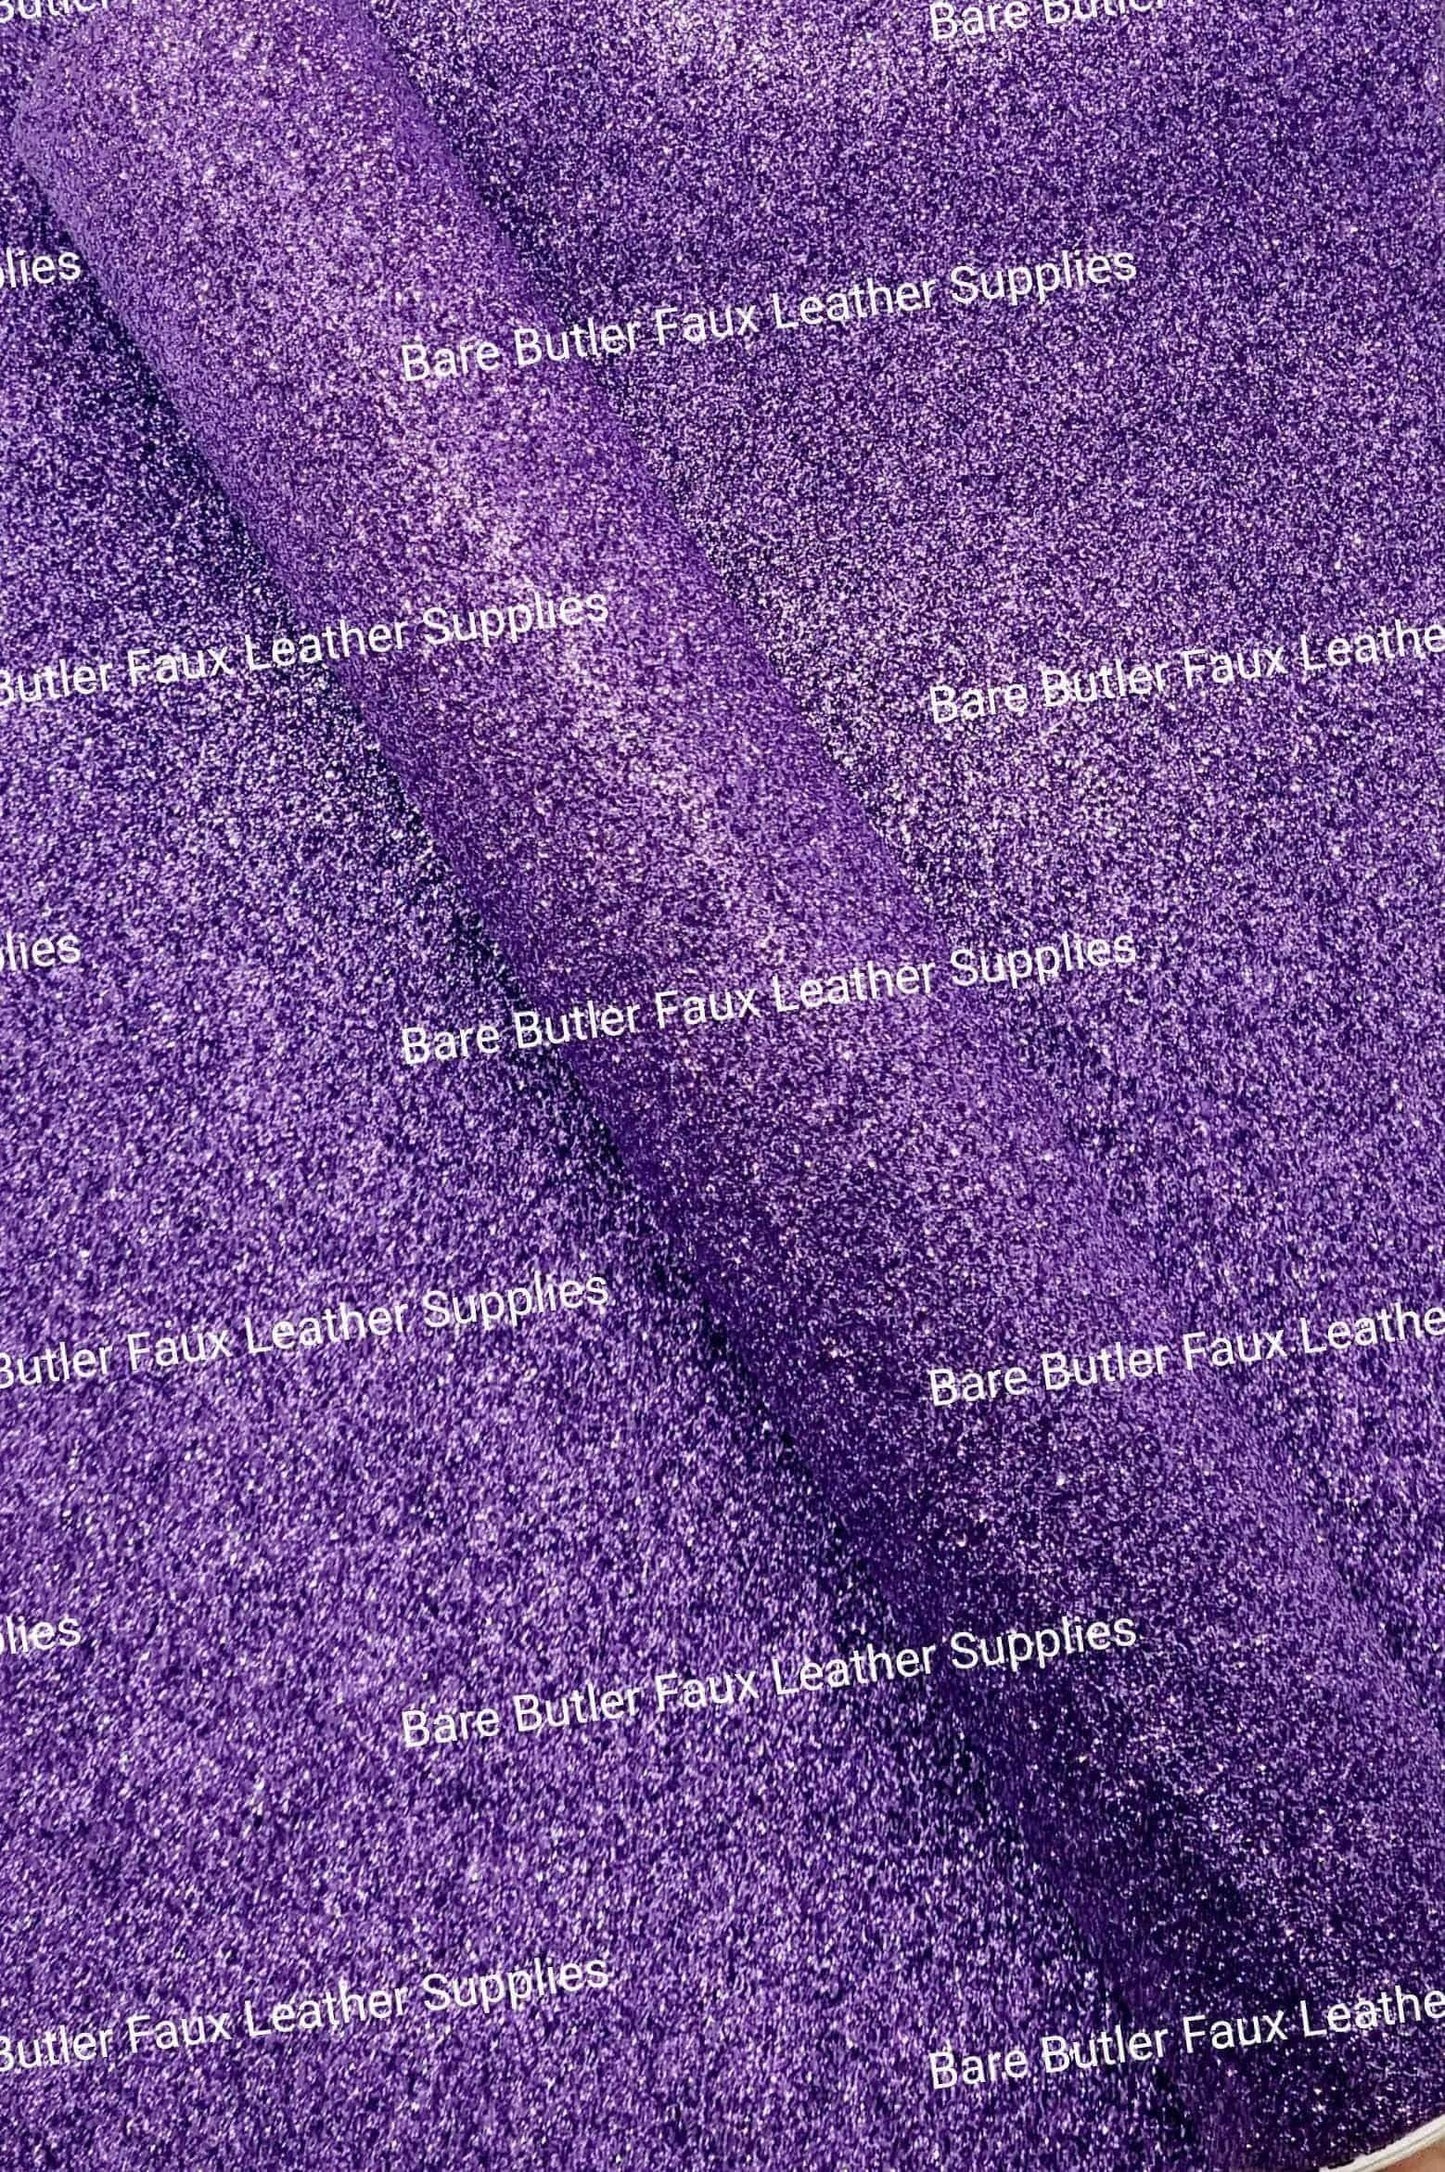 Glitter - Violet - Berry, Faux, Faux Leather, Fine, Glitter, Leather, leatherette, Super - Bare Butler Faux Leather Supplies 